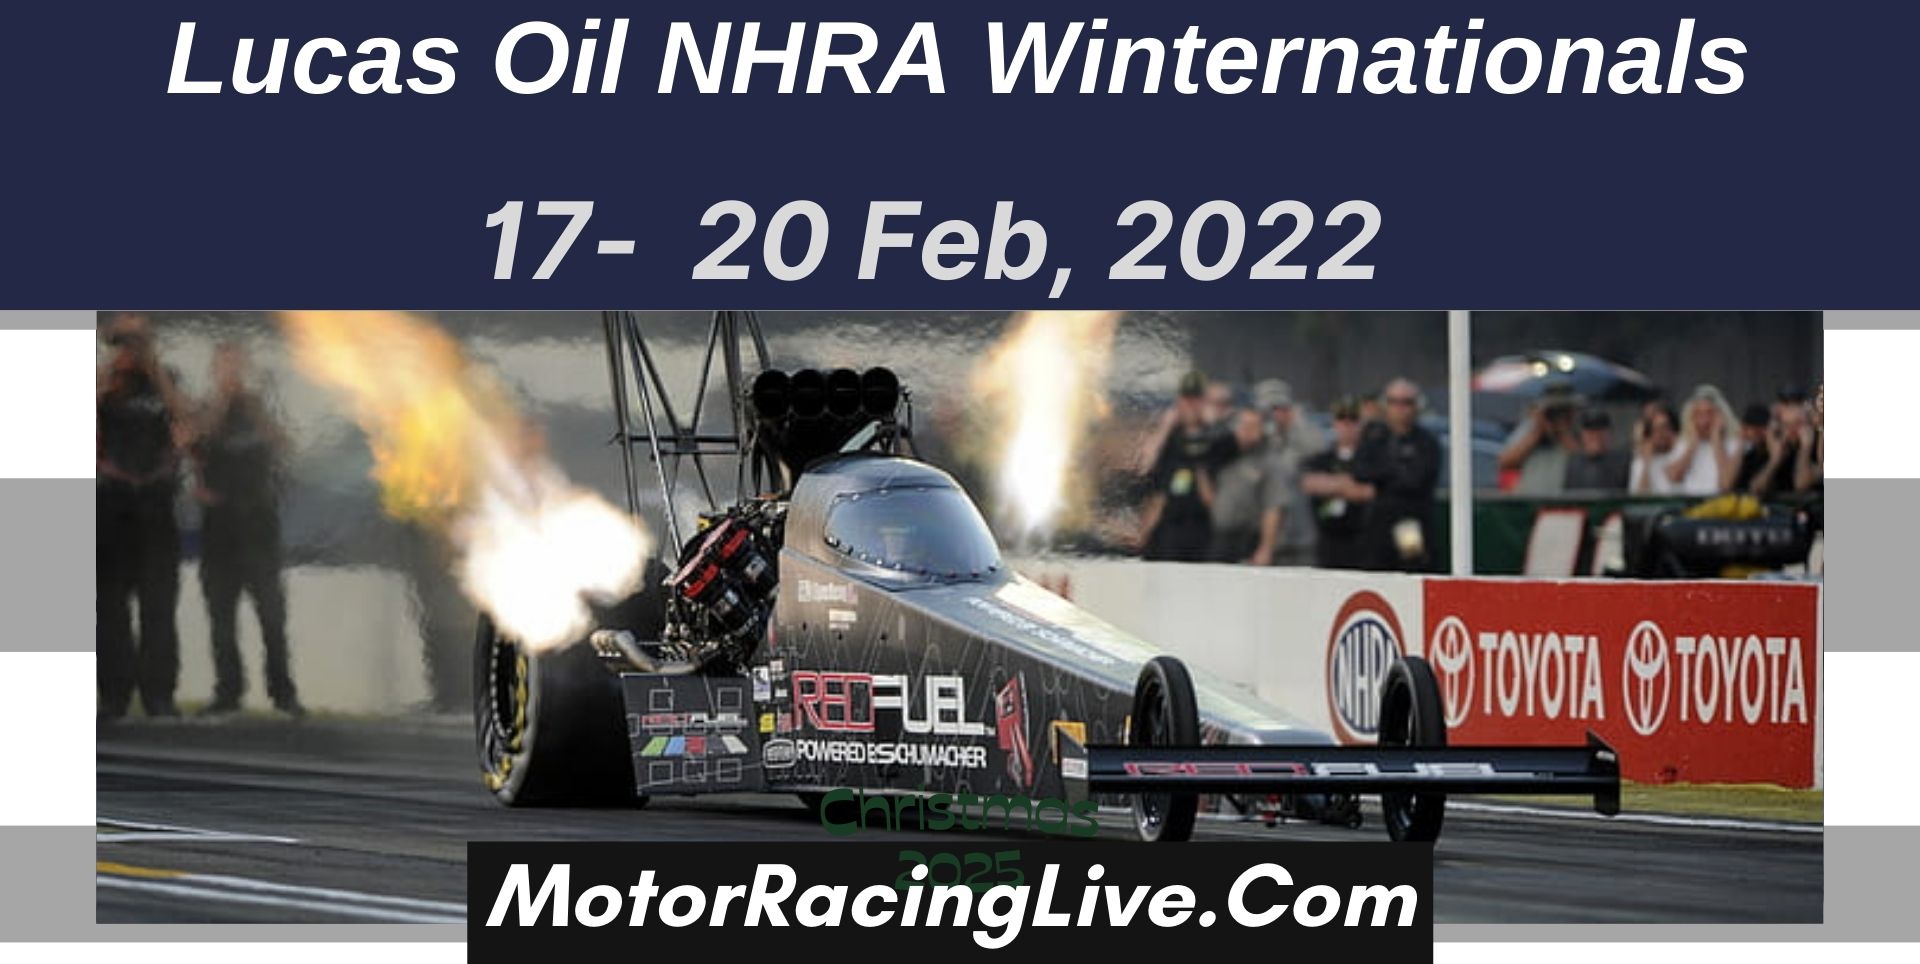 Lucas Oil NHRA Winternationals 2022 Live Stream